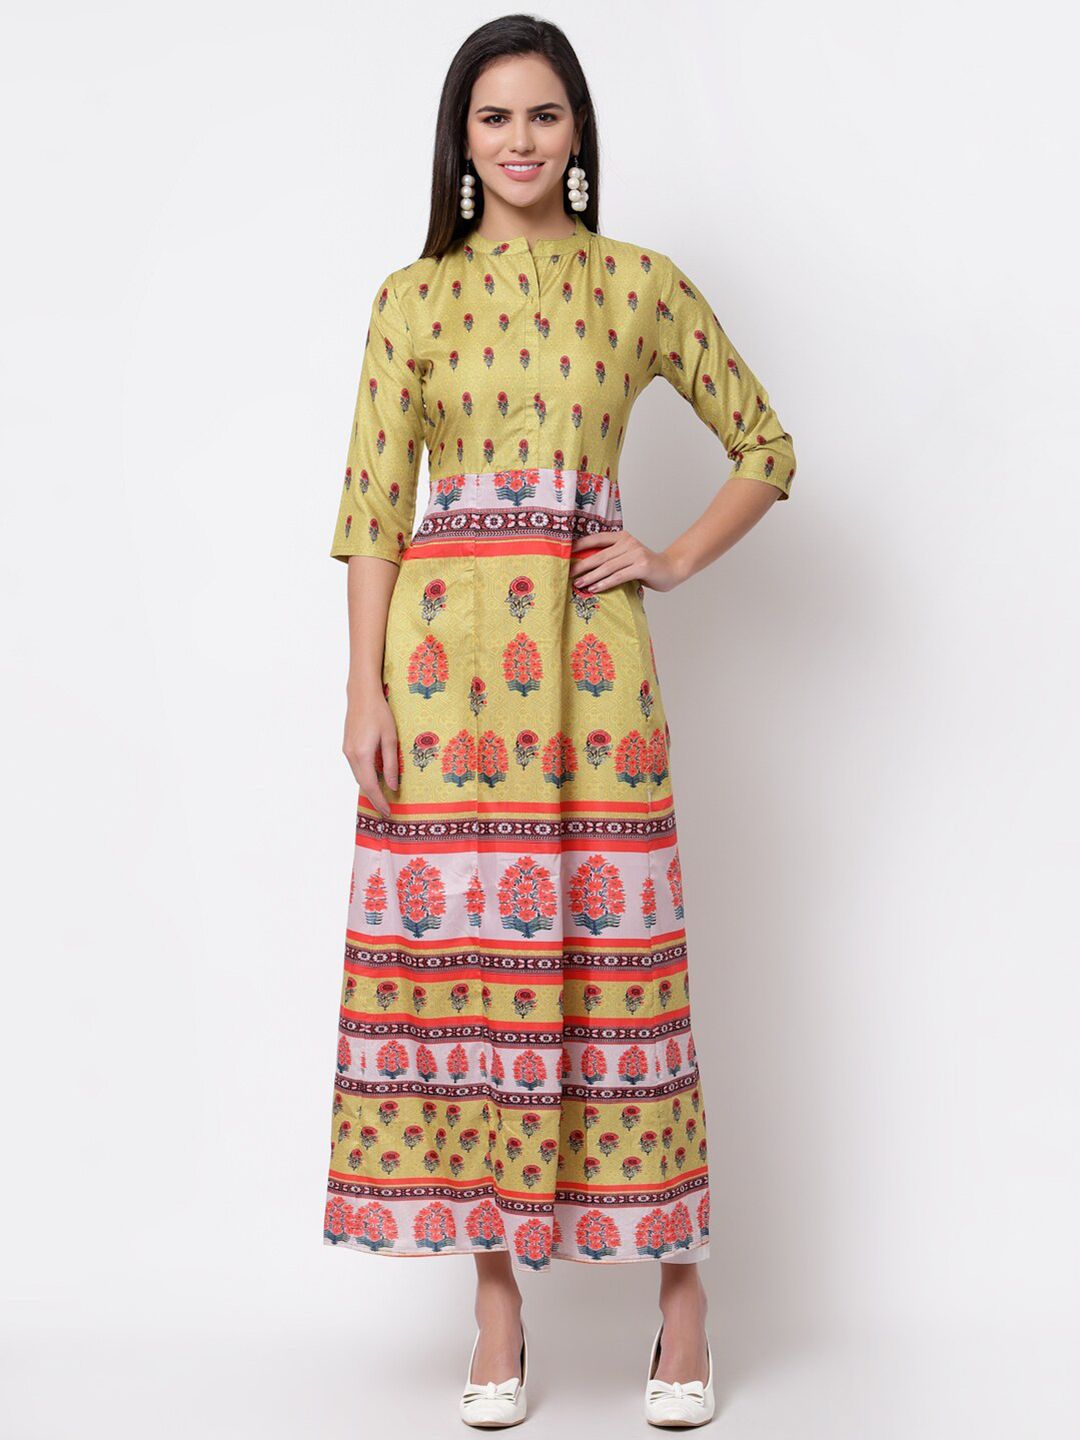 Myshka Mustard Yellow Ethnic Motifs Cotton Maxi Dress Price in India